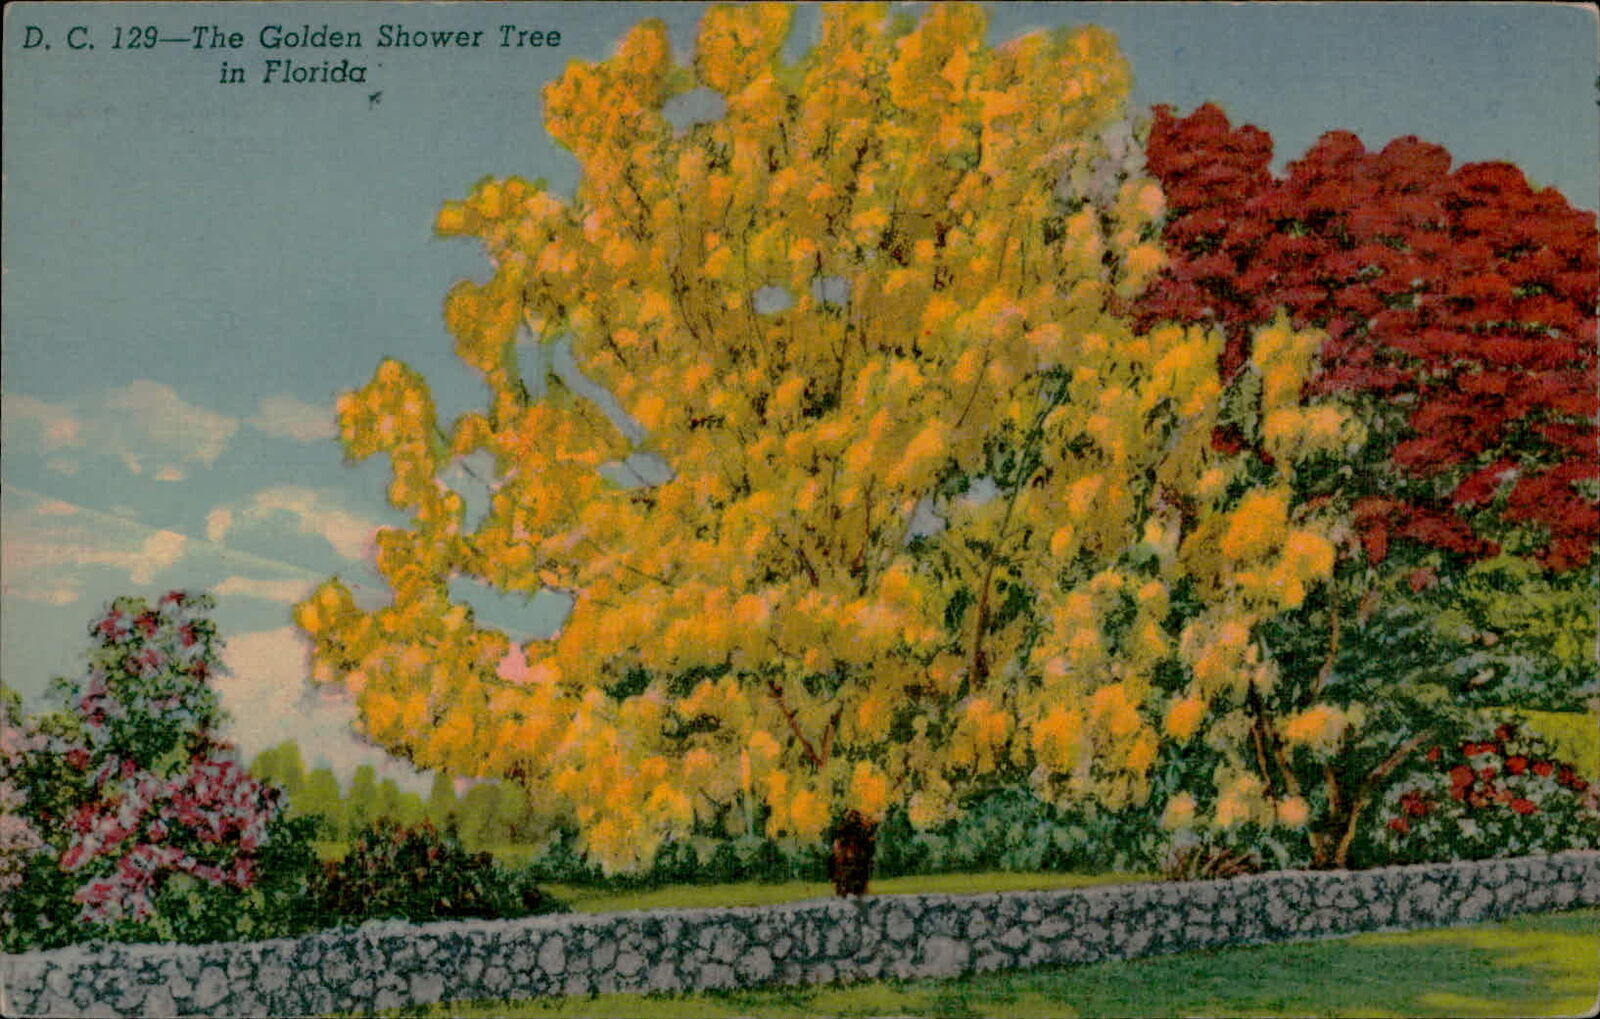 Postcard: D. C. 129-The Golden Shower Tree in Florida